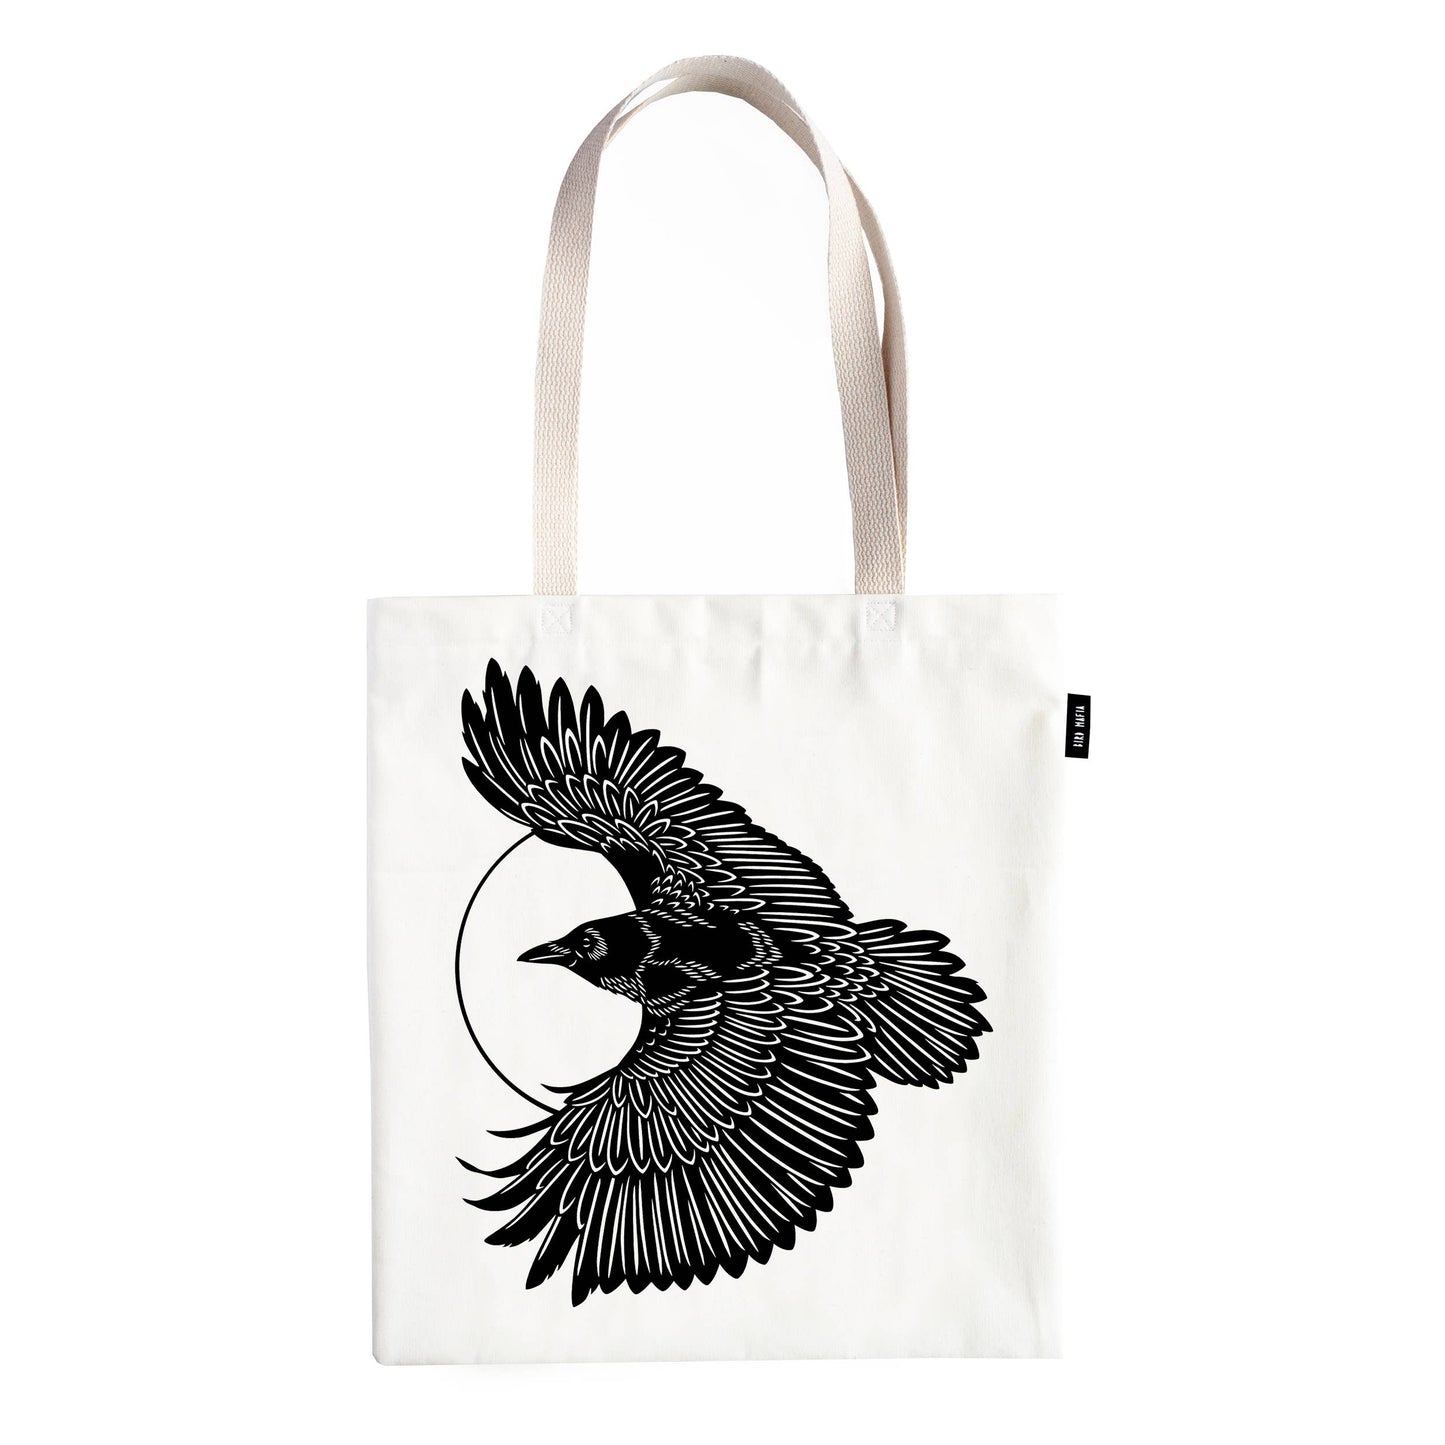 Crow tote bag